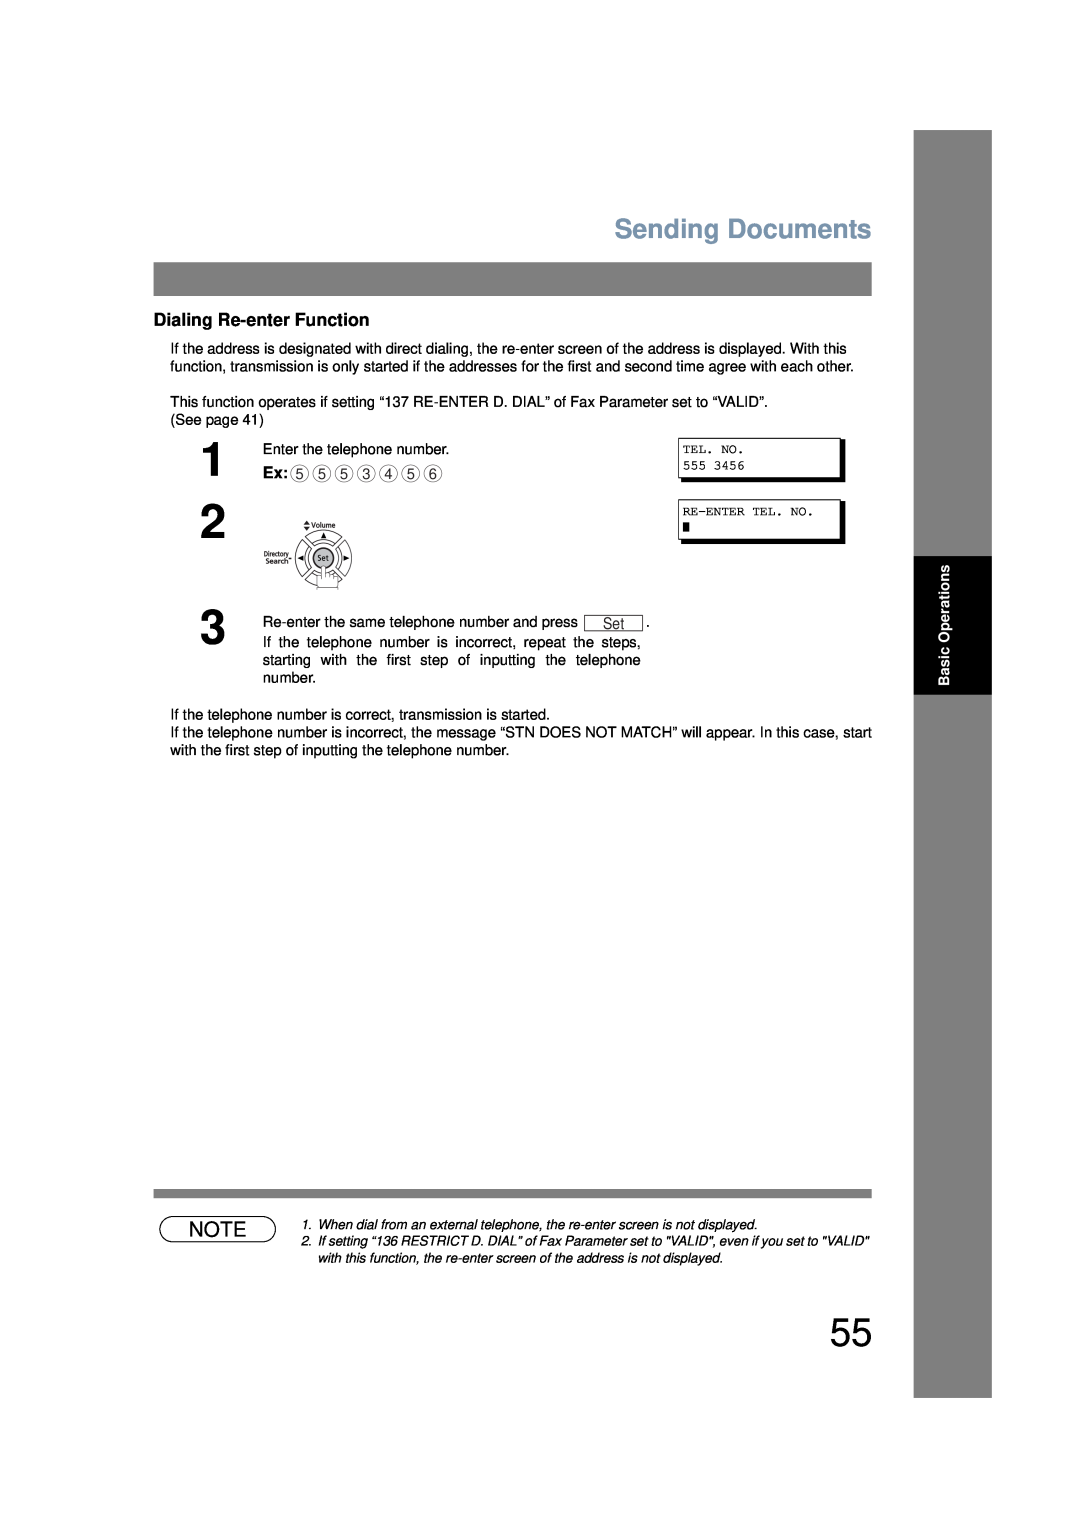 Panasonic UF-6200 operating instructions Sending Documents, Ex 5 5 5 3 4 5, Basic Operations, TEL. NO. 555 RE-ENTER TEL. NO 